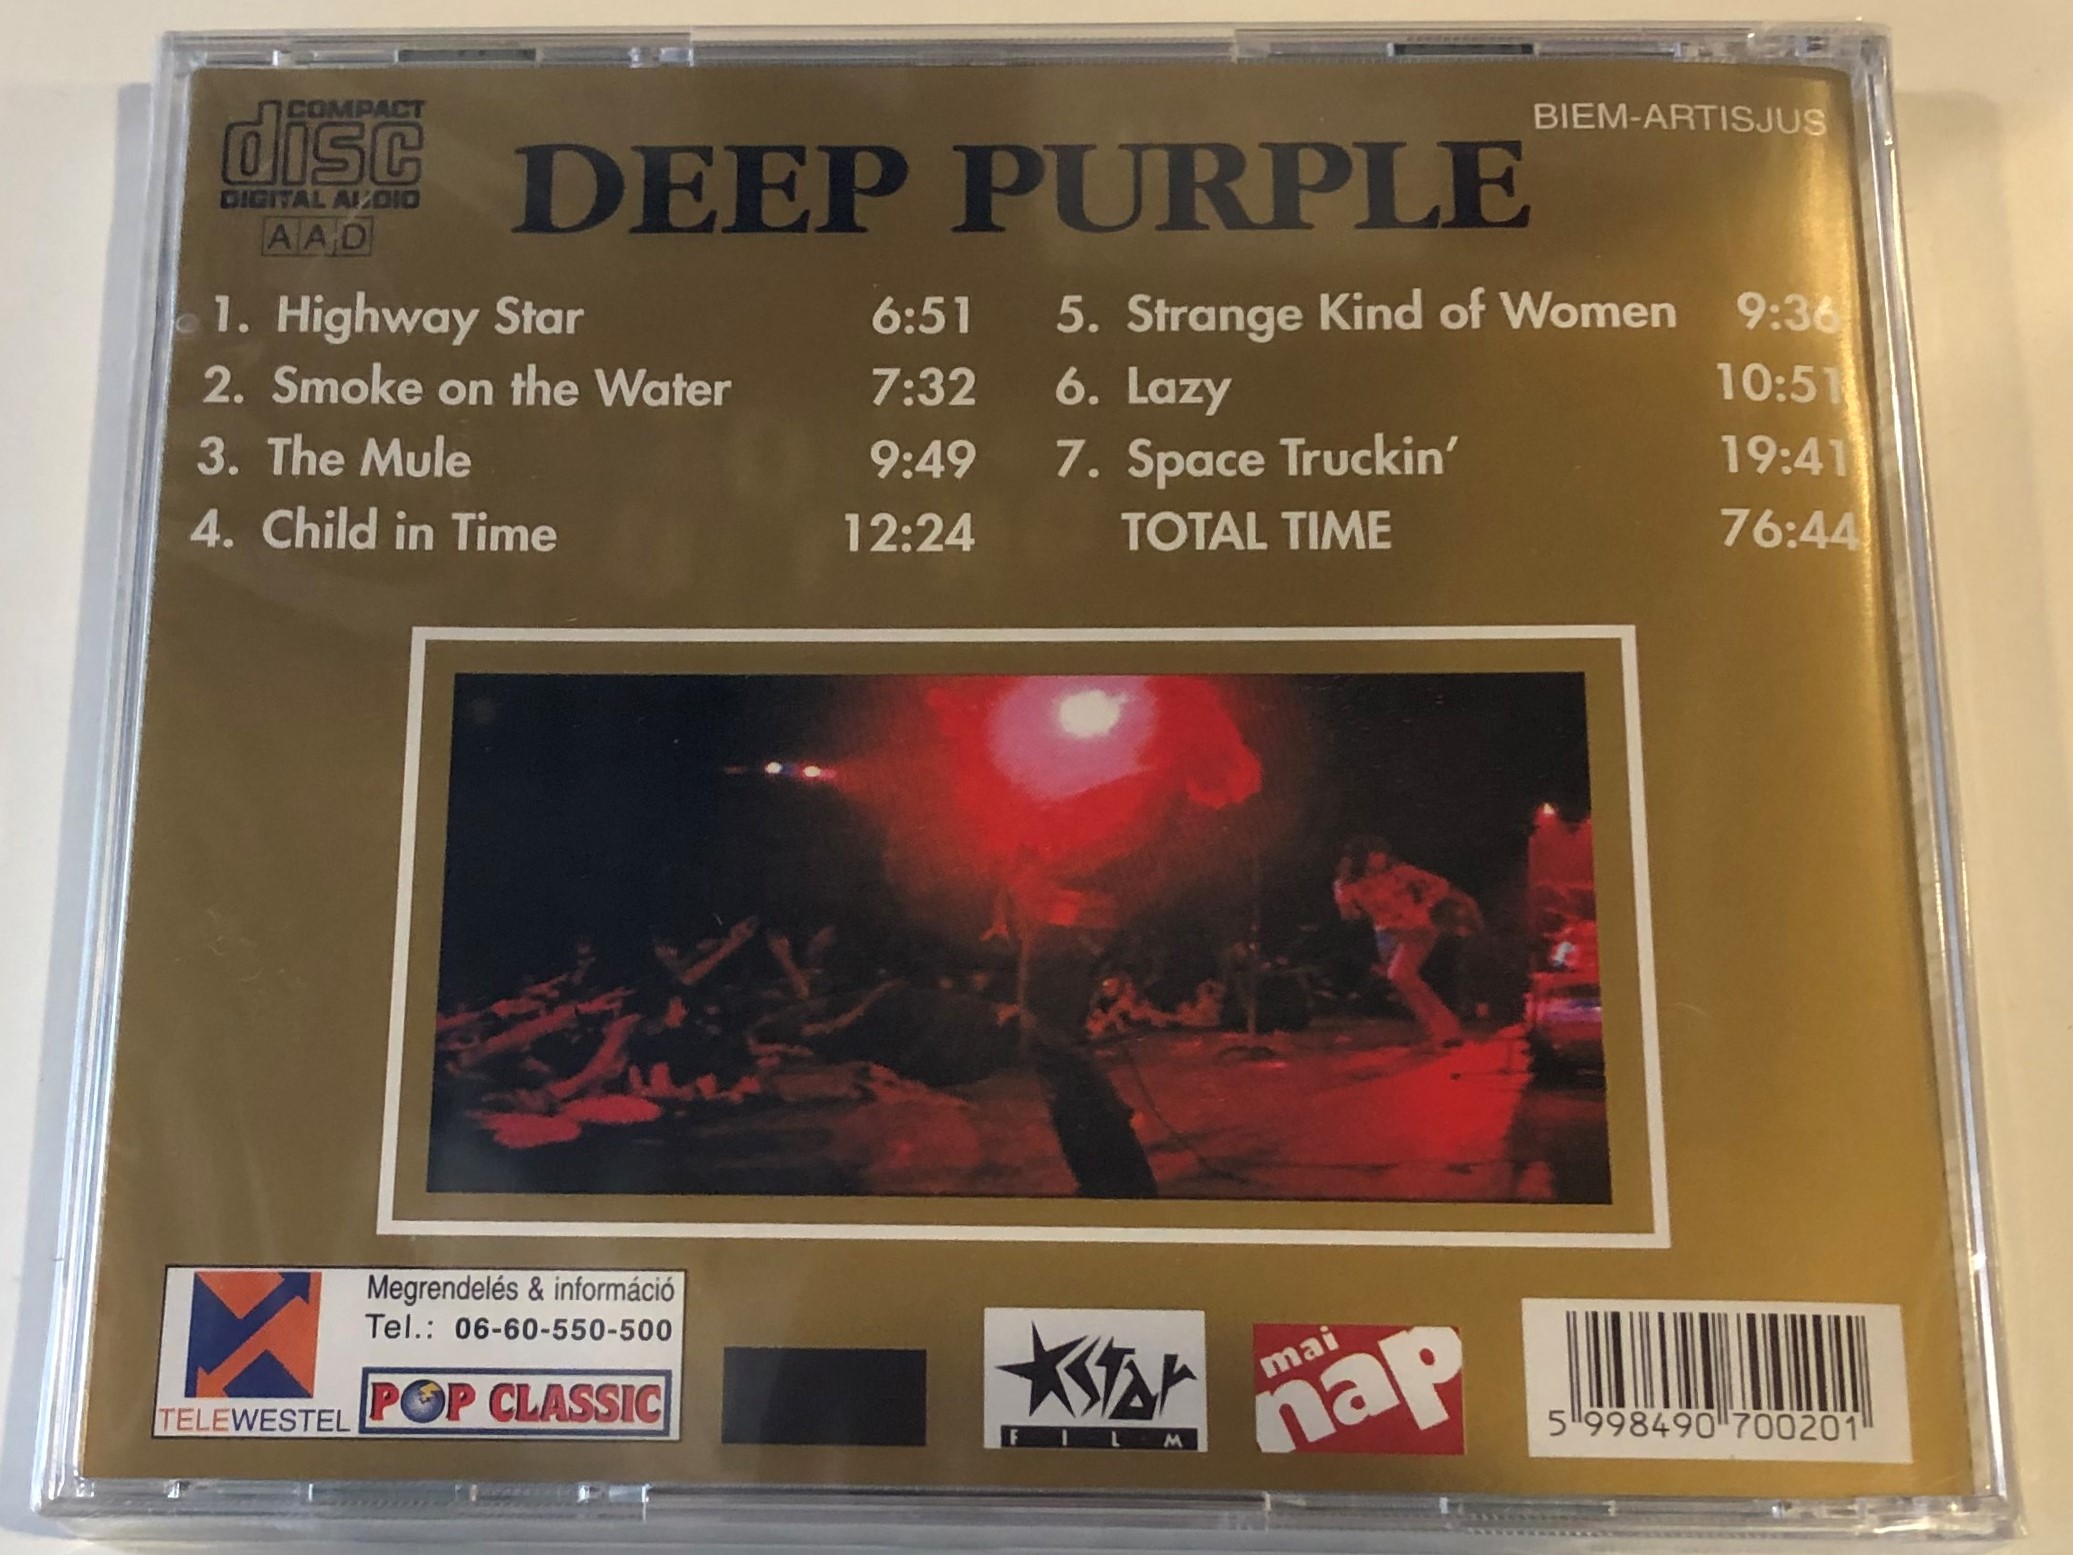 deep-purple-made-in-japan-pop-classic-total-time-7644-audio-cd-5998490700201-2-.jpg